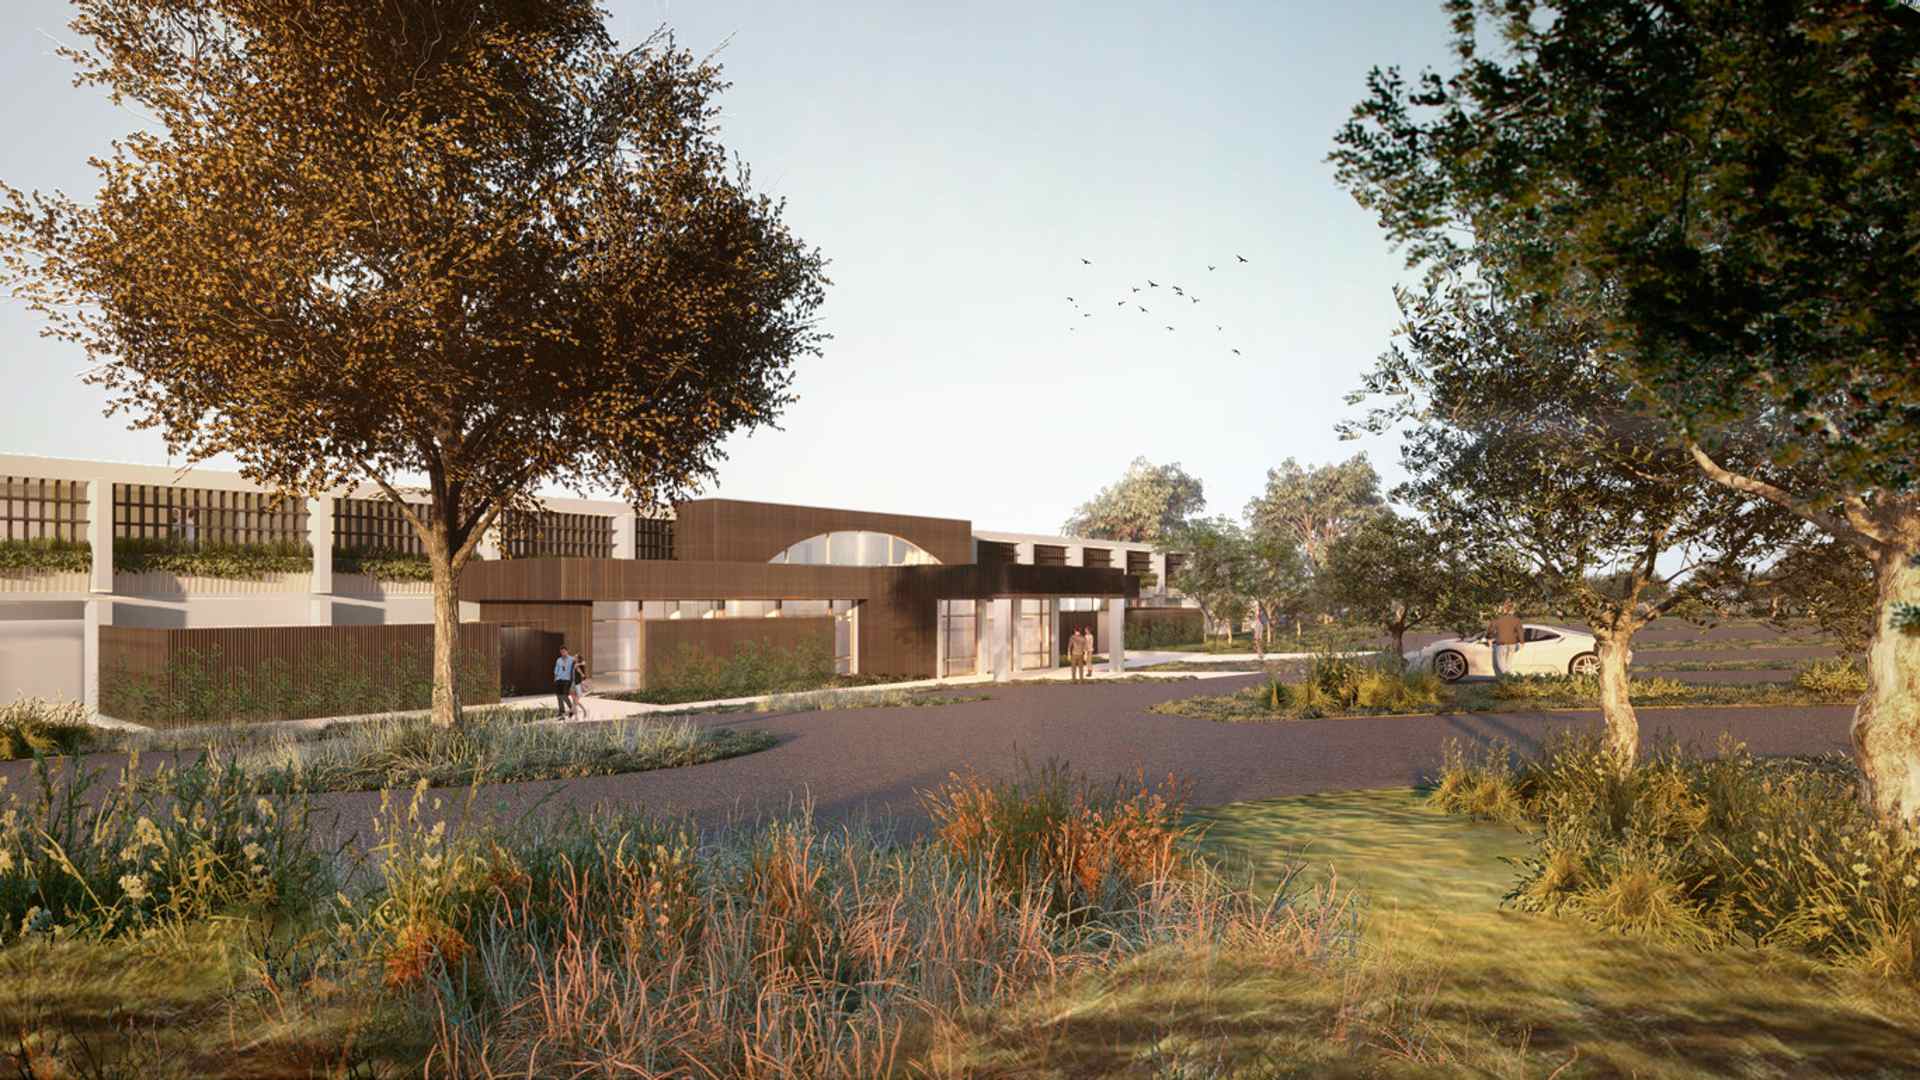 The Yarra Valley's Levantine Hill Estate Is Getting a New $20-Million Fender Katsalidis-Designed Hotel